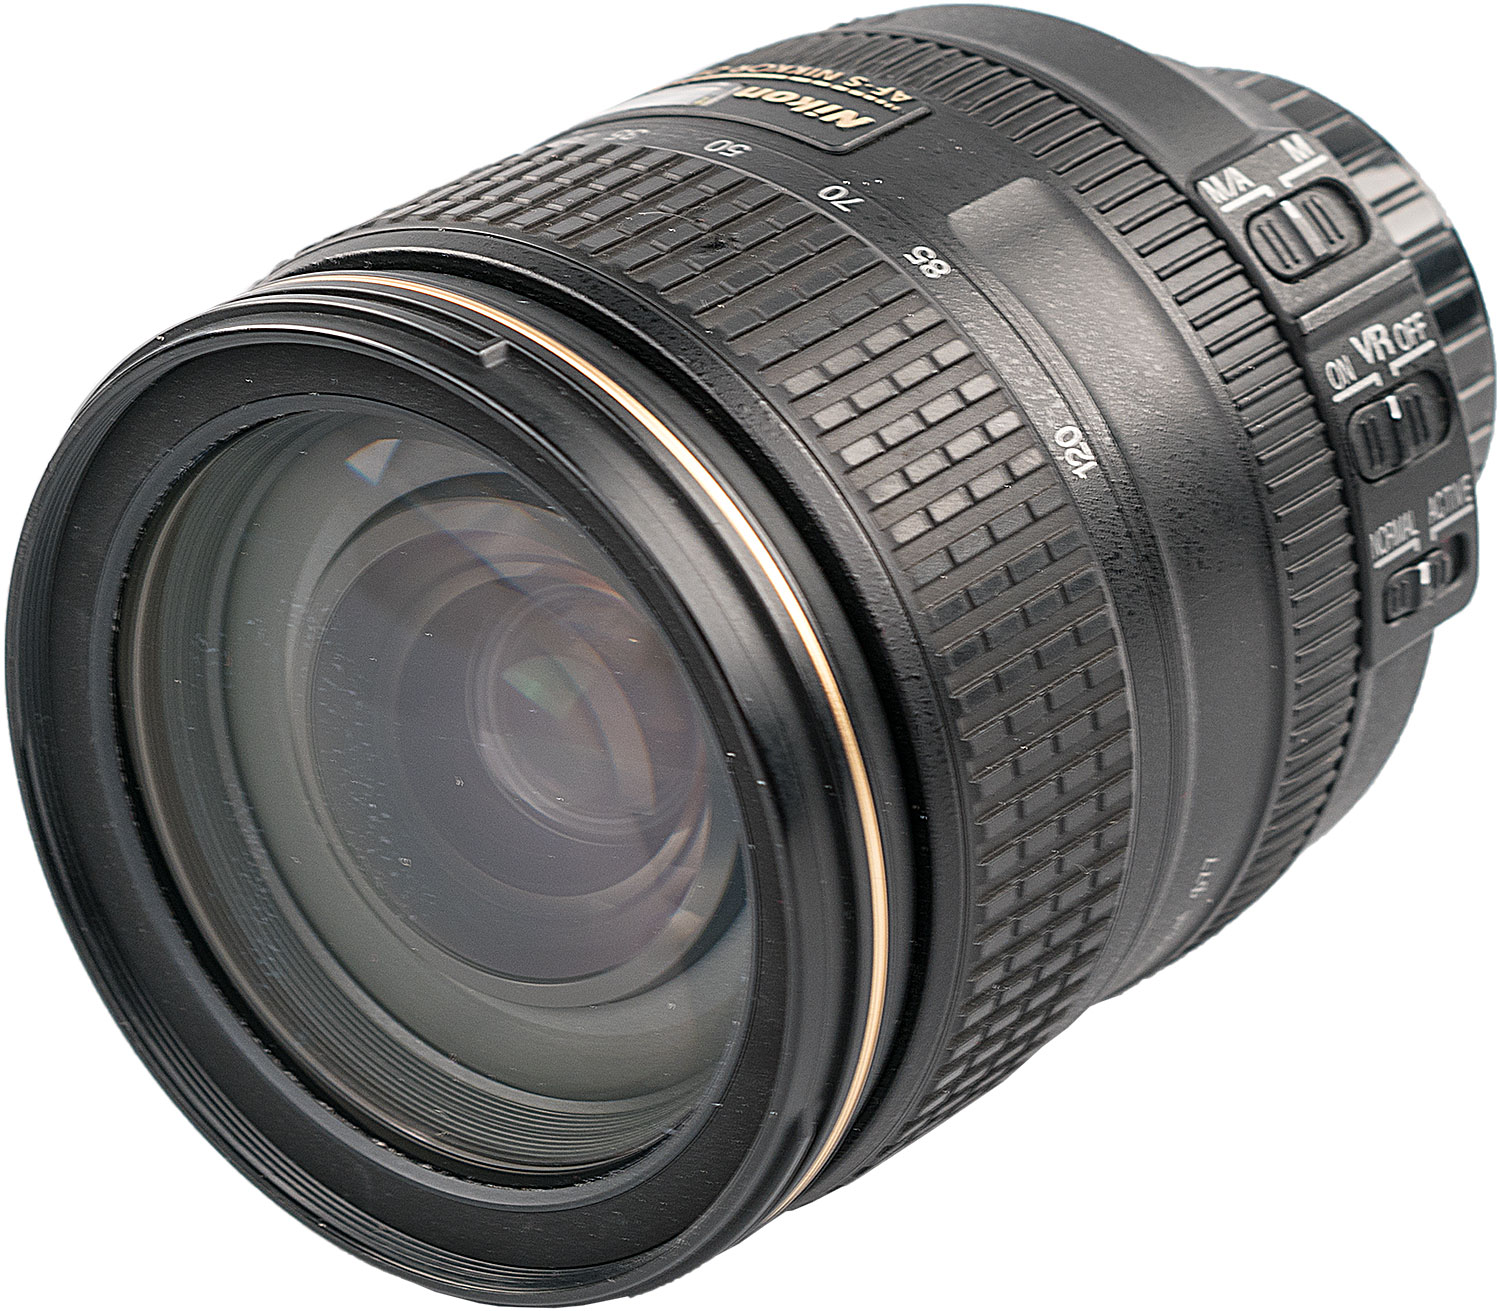 24 120mm 4g vr. Nikon 24-120mm f/4g ed VR af-s Nikkor. Nikkor 24-120mm f/4g ed VR.